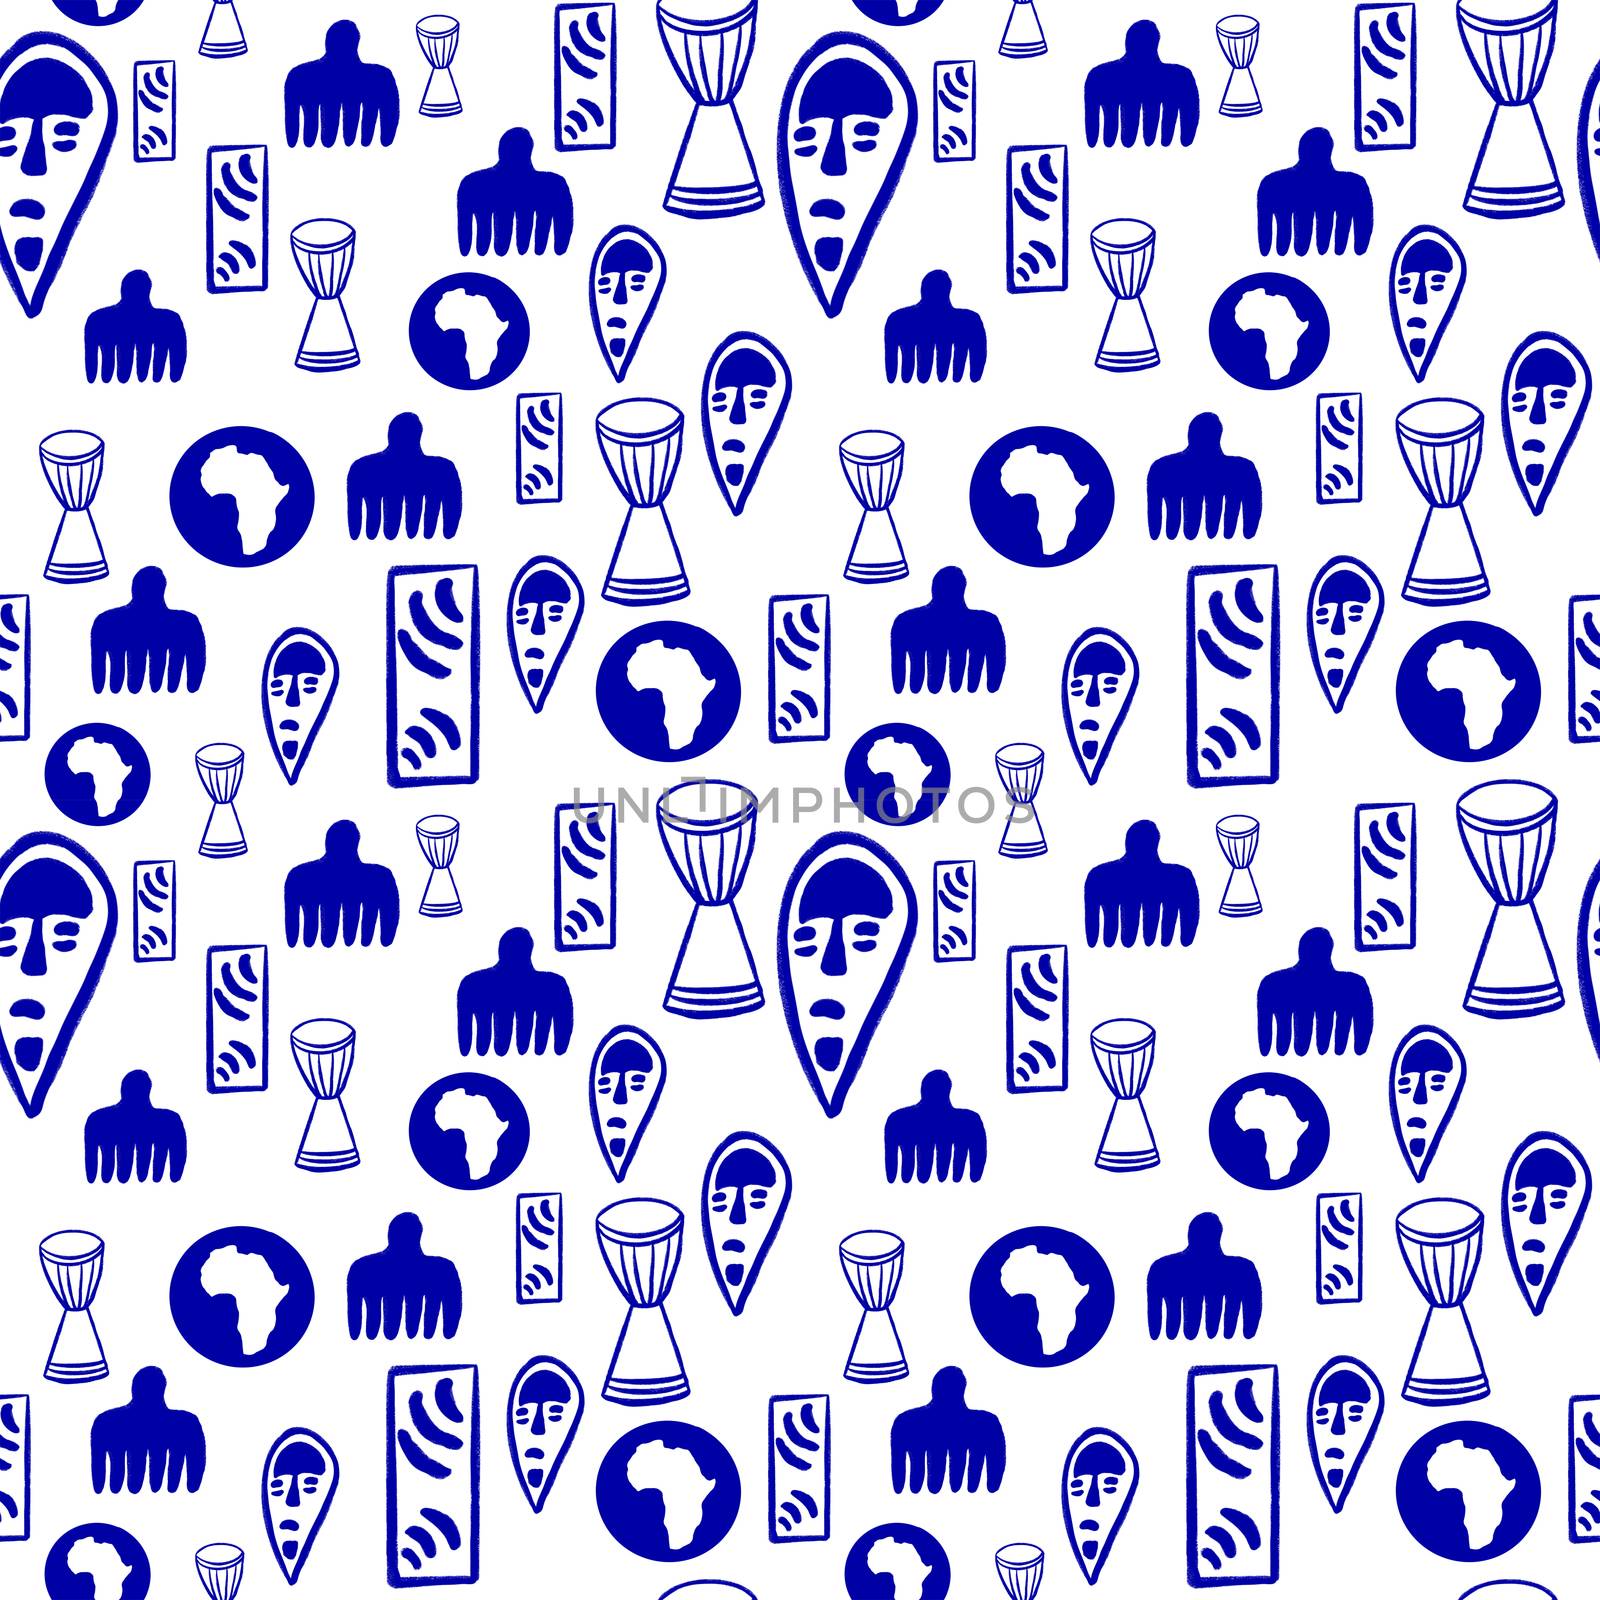 Blue Seamless Tribal pattern on white background. African symbols endless pattern. Ethnic Aztec style illustration.